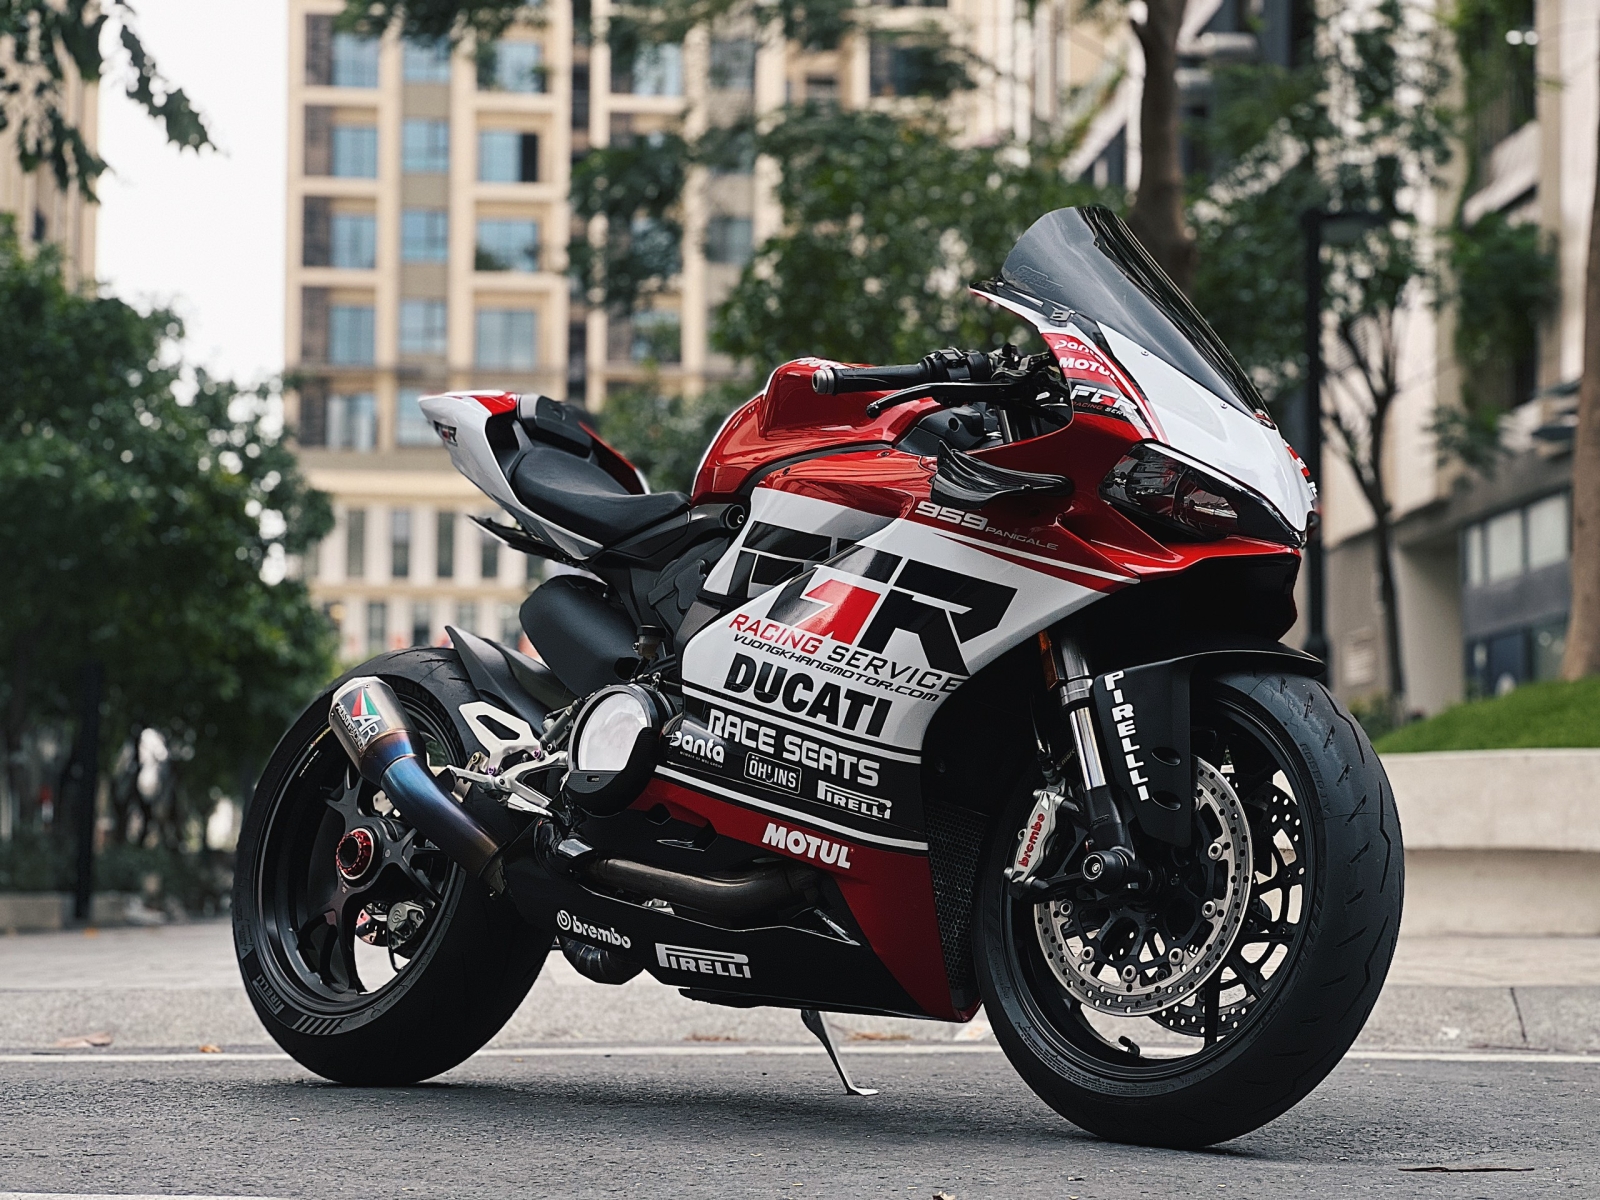 584 . Ducati Panigale 959 model 2019